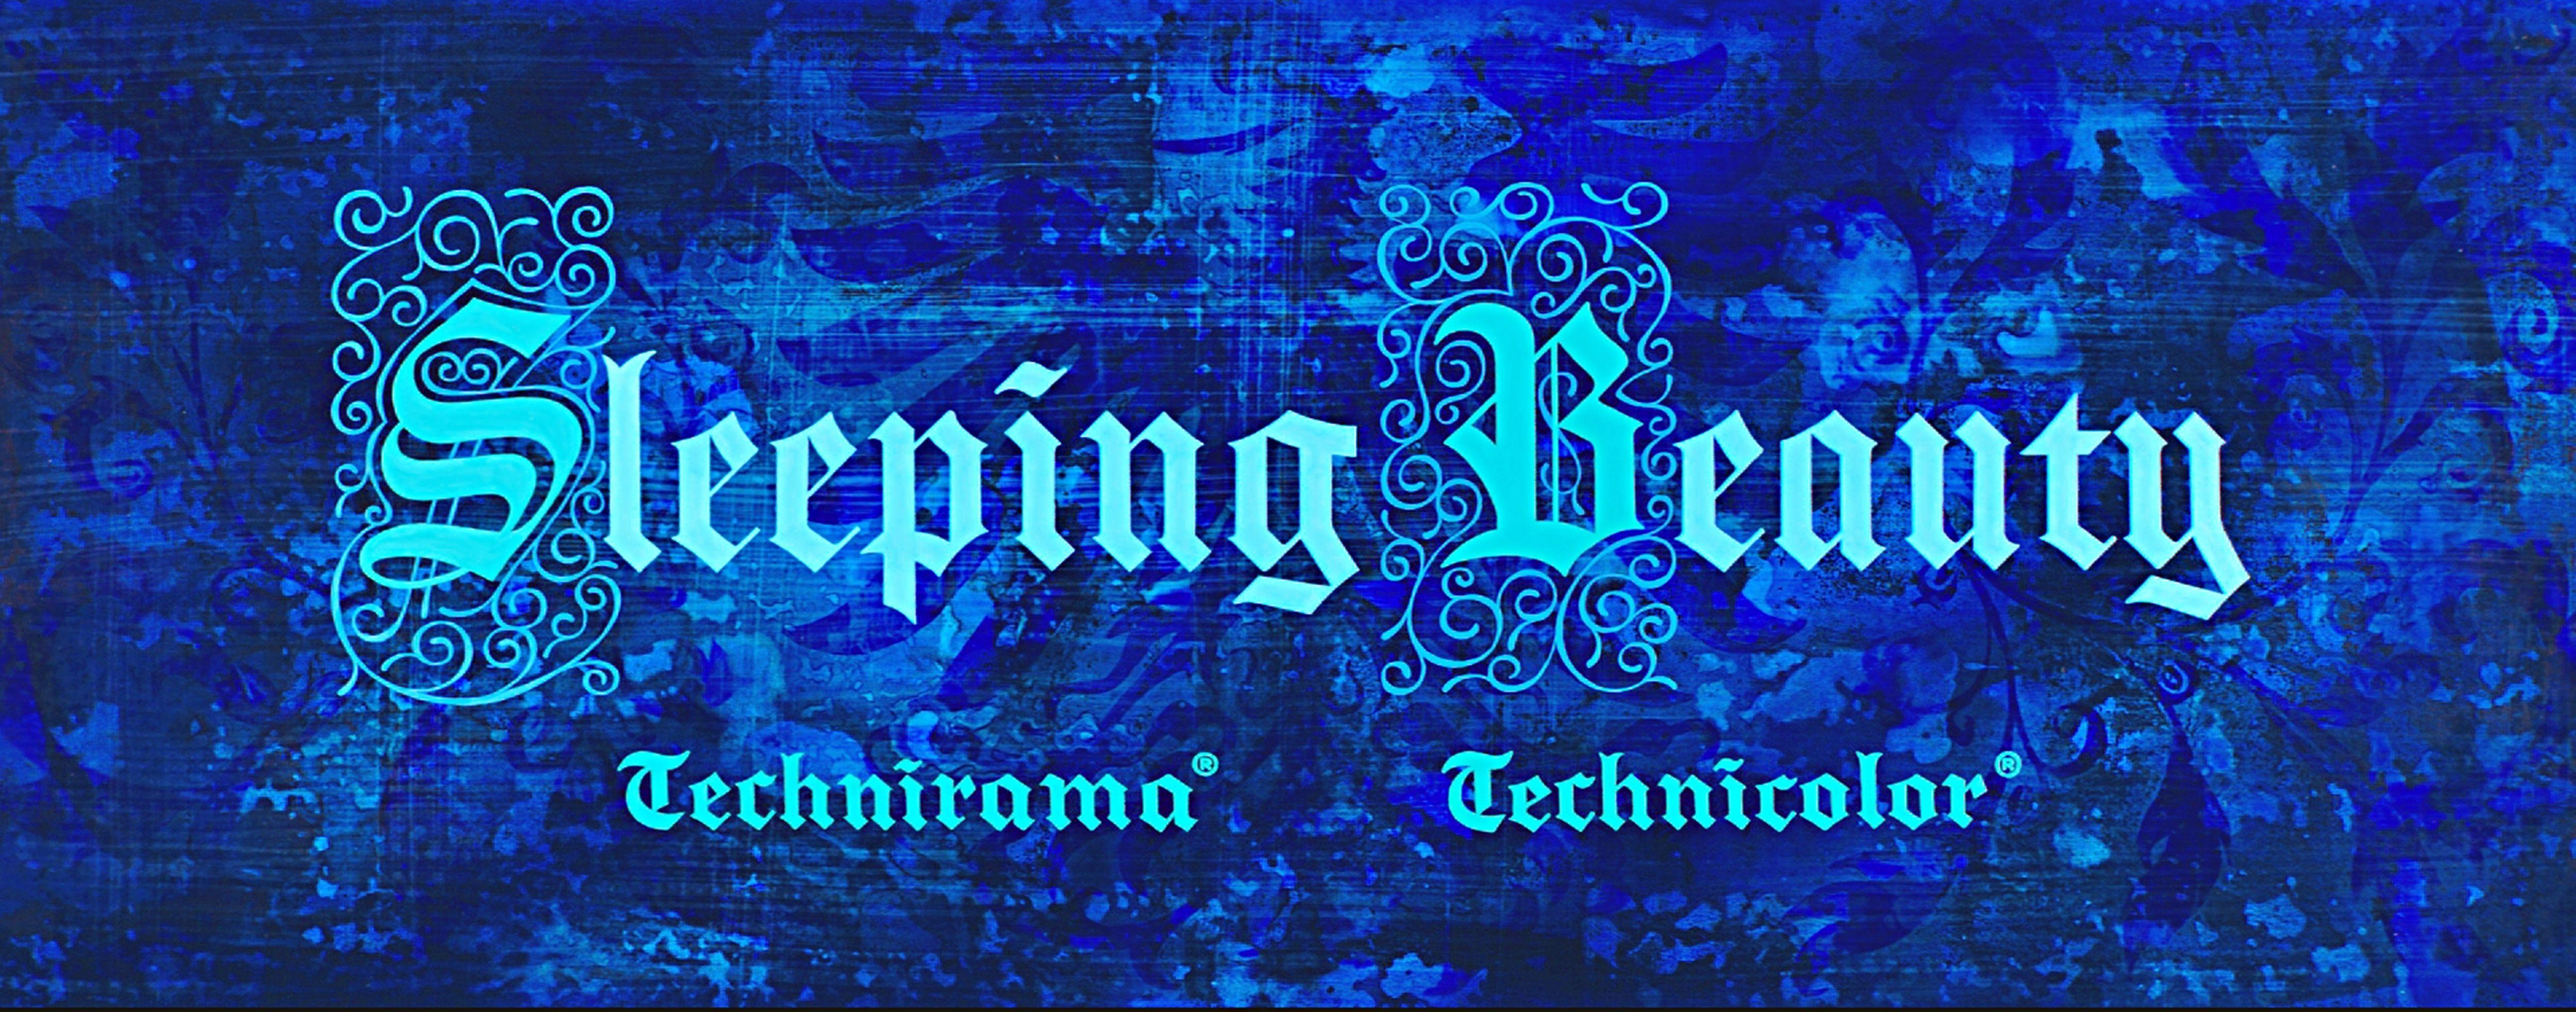 Sleeping Beauty Logo - Sleeping Beauty | Logopedia | FANDOM powered by Wikia